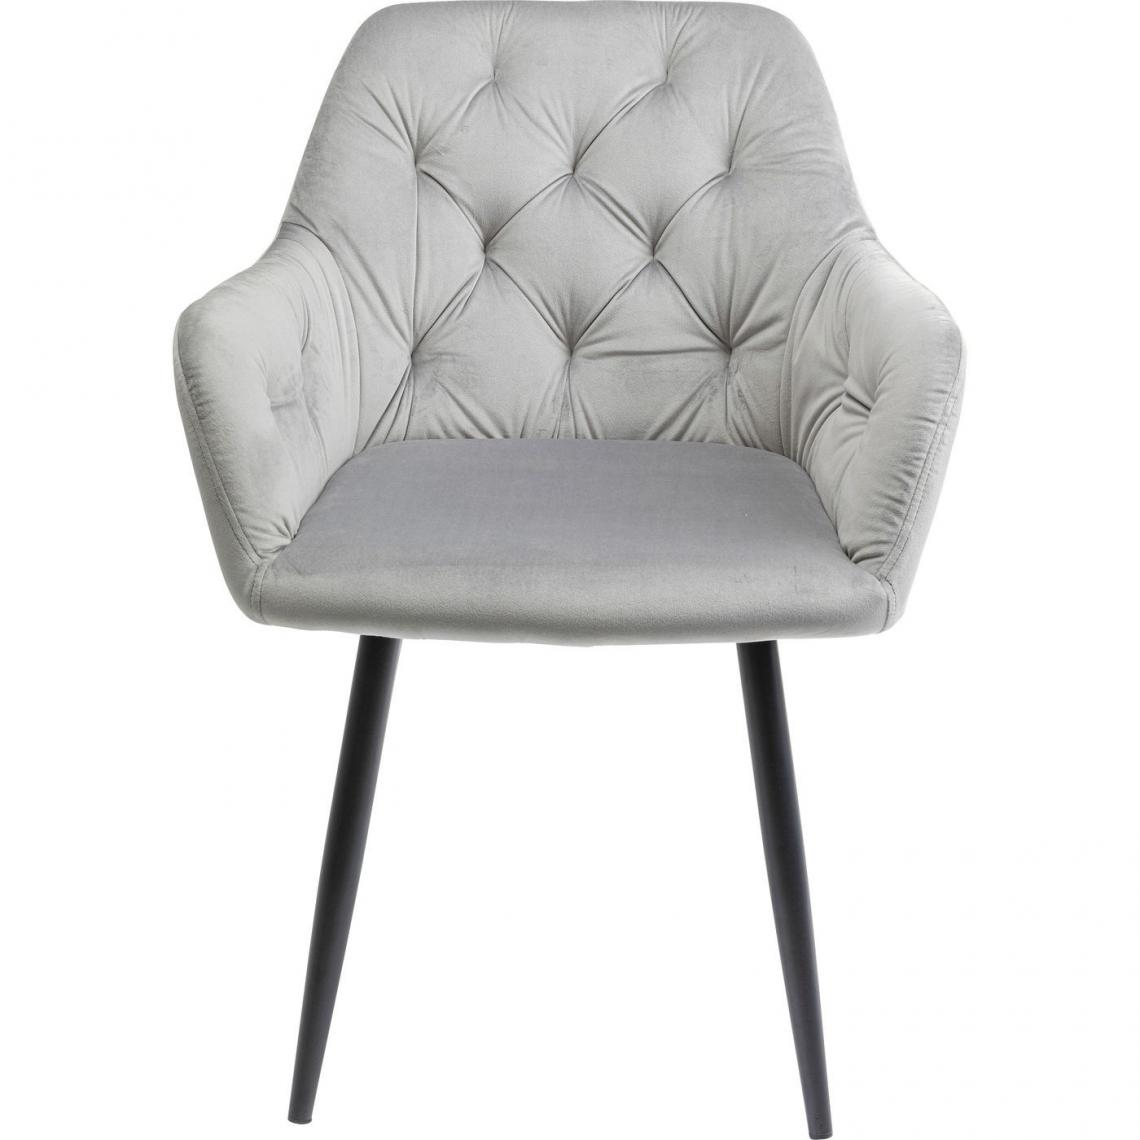 Karedesign - Chaise avec accoudoirs Kira velours gris Kare Design - Chaises